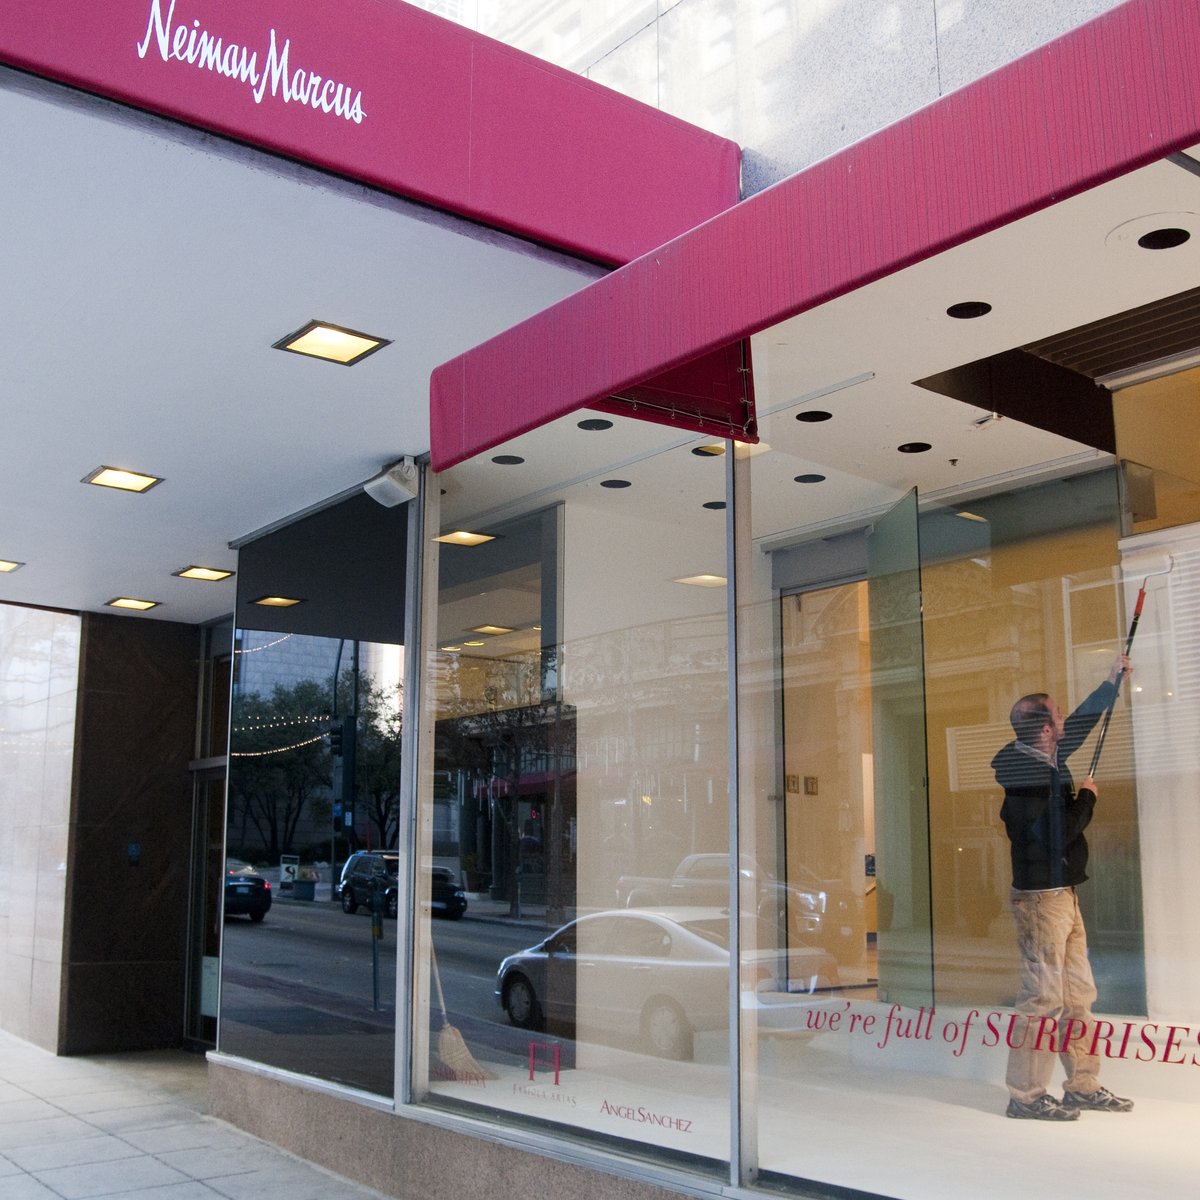 Neiman Marcus Cuts Jobs at Headquarters Amid Restructuring – Footwear News